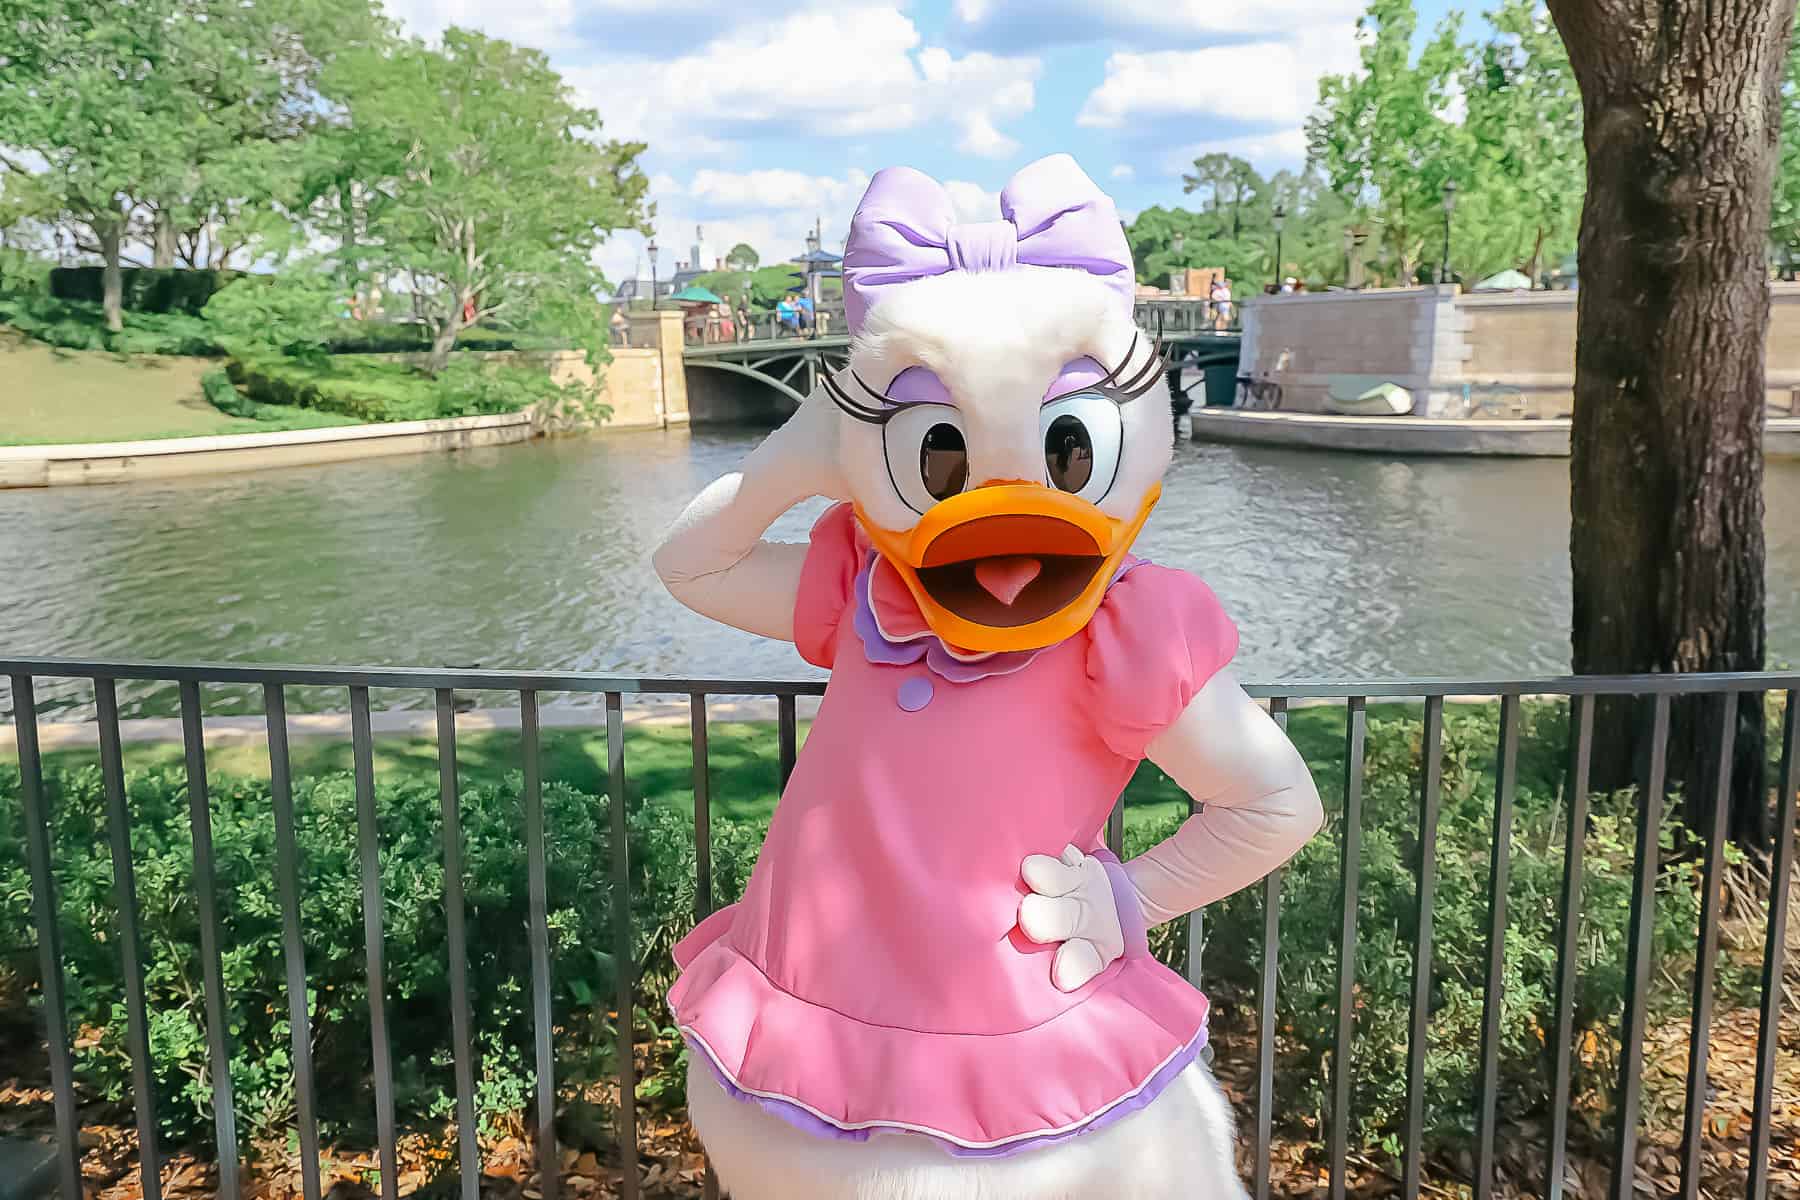 Daisy Duck 